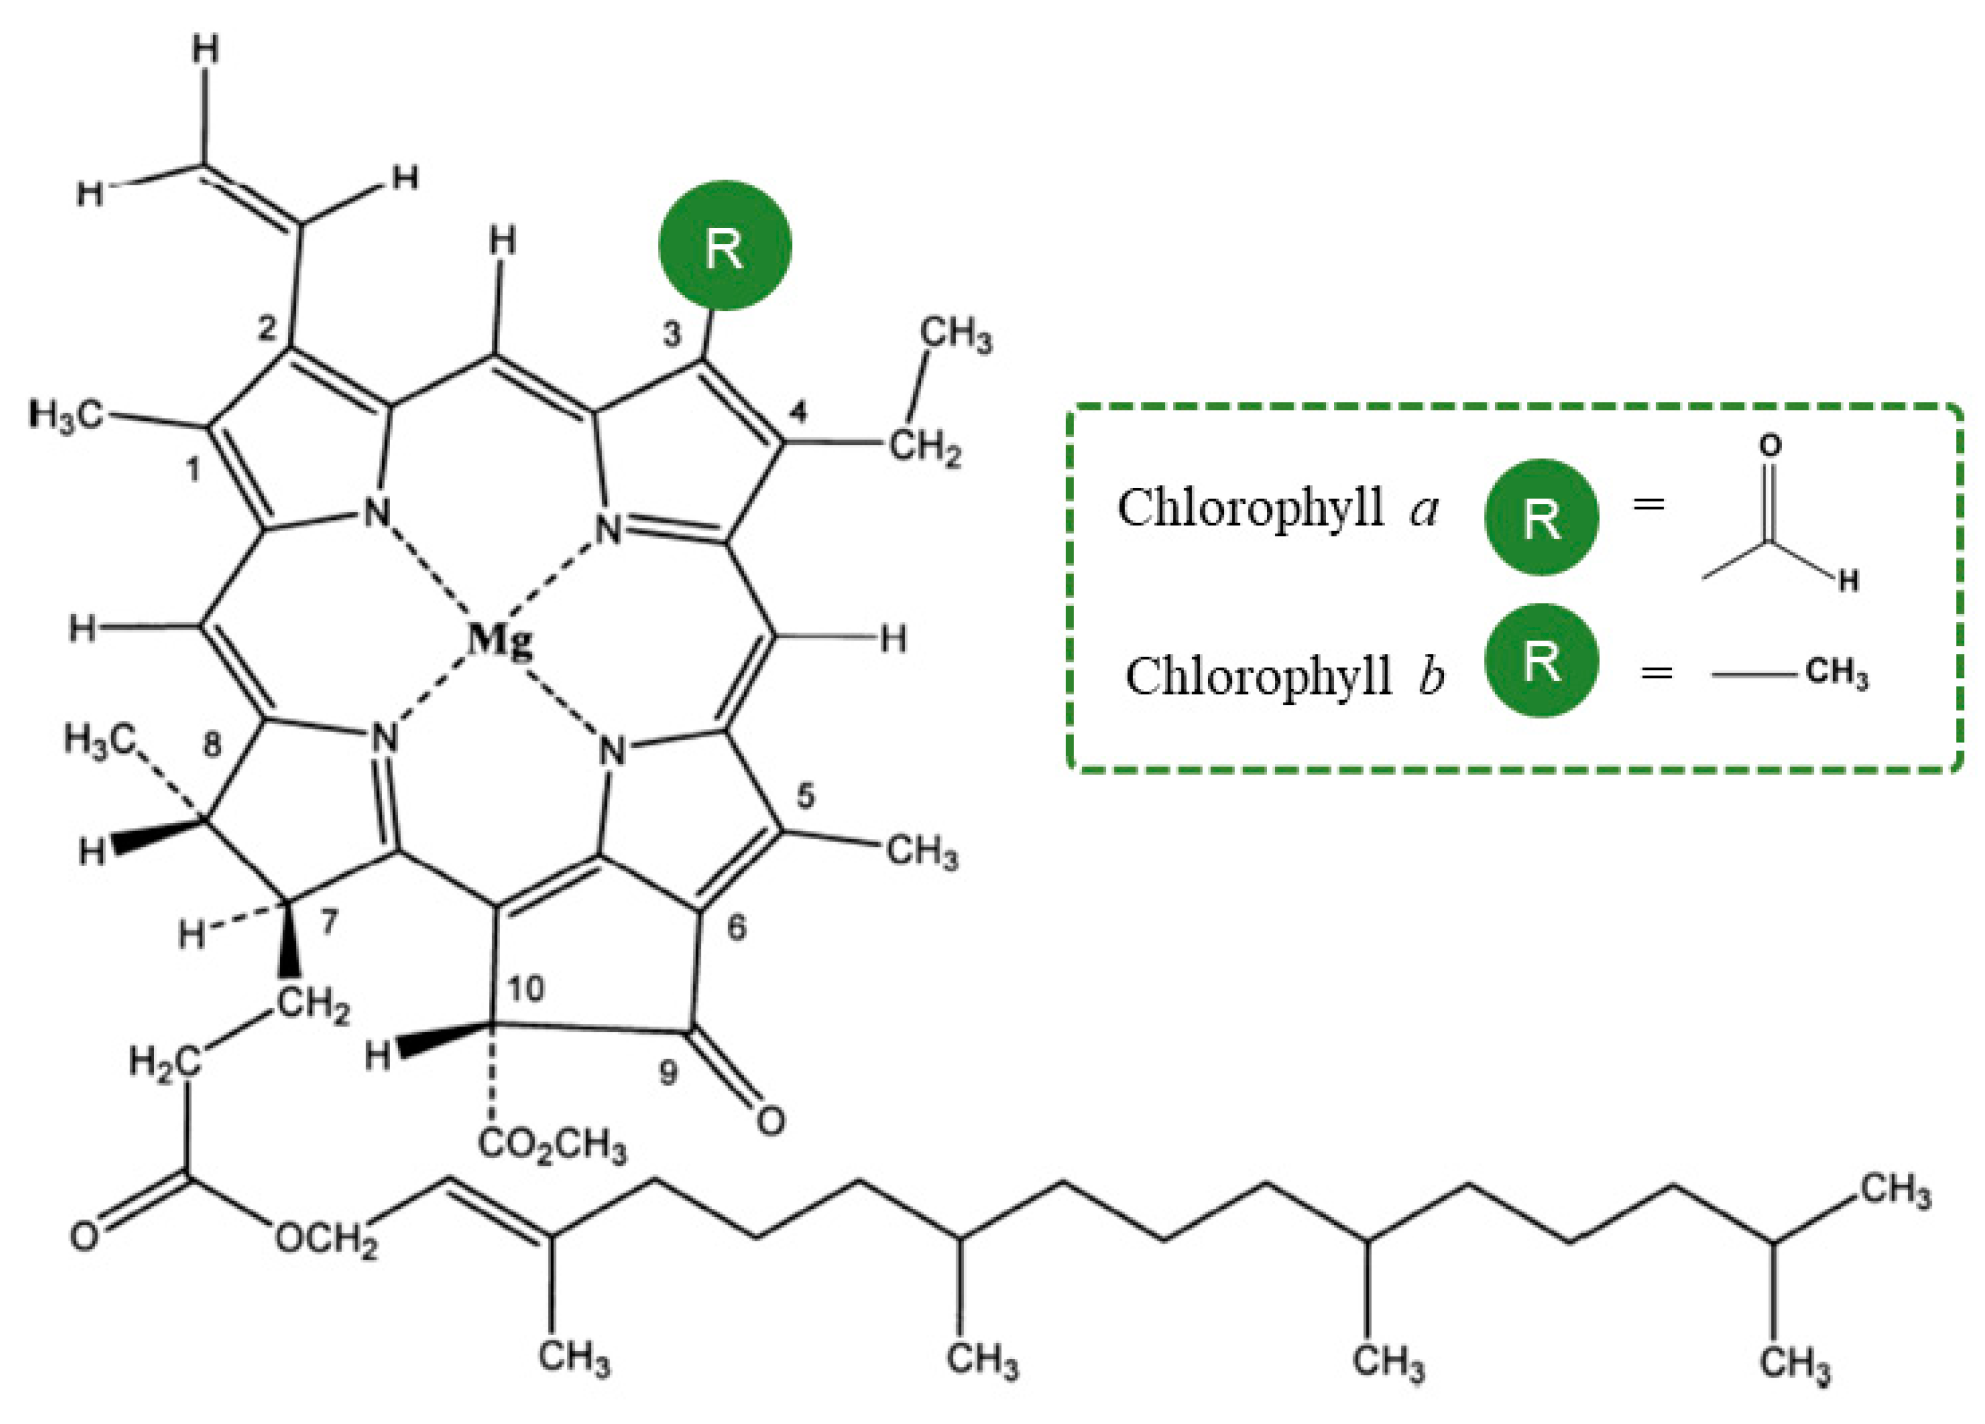 Chlorophyll c stock illustration. Illustration of molecule - 84224637